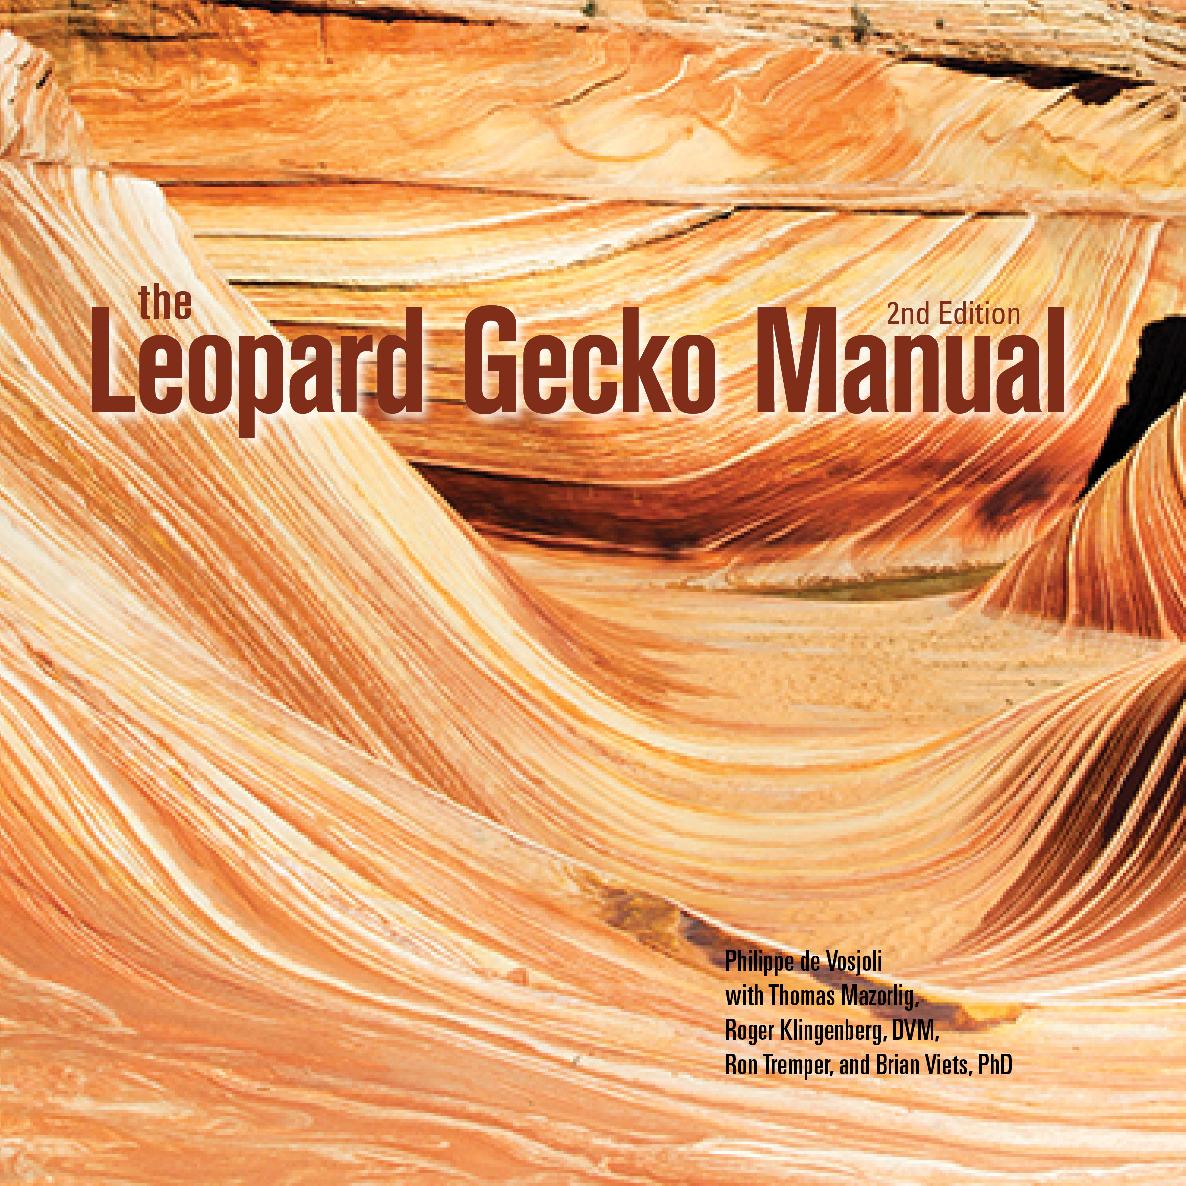 THE LEOPARD GECKO MANUAL CompanionHouse Books is an imprint of Fox Chapel - photo 1